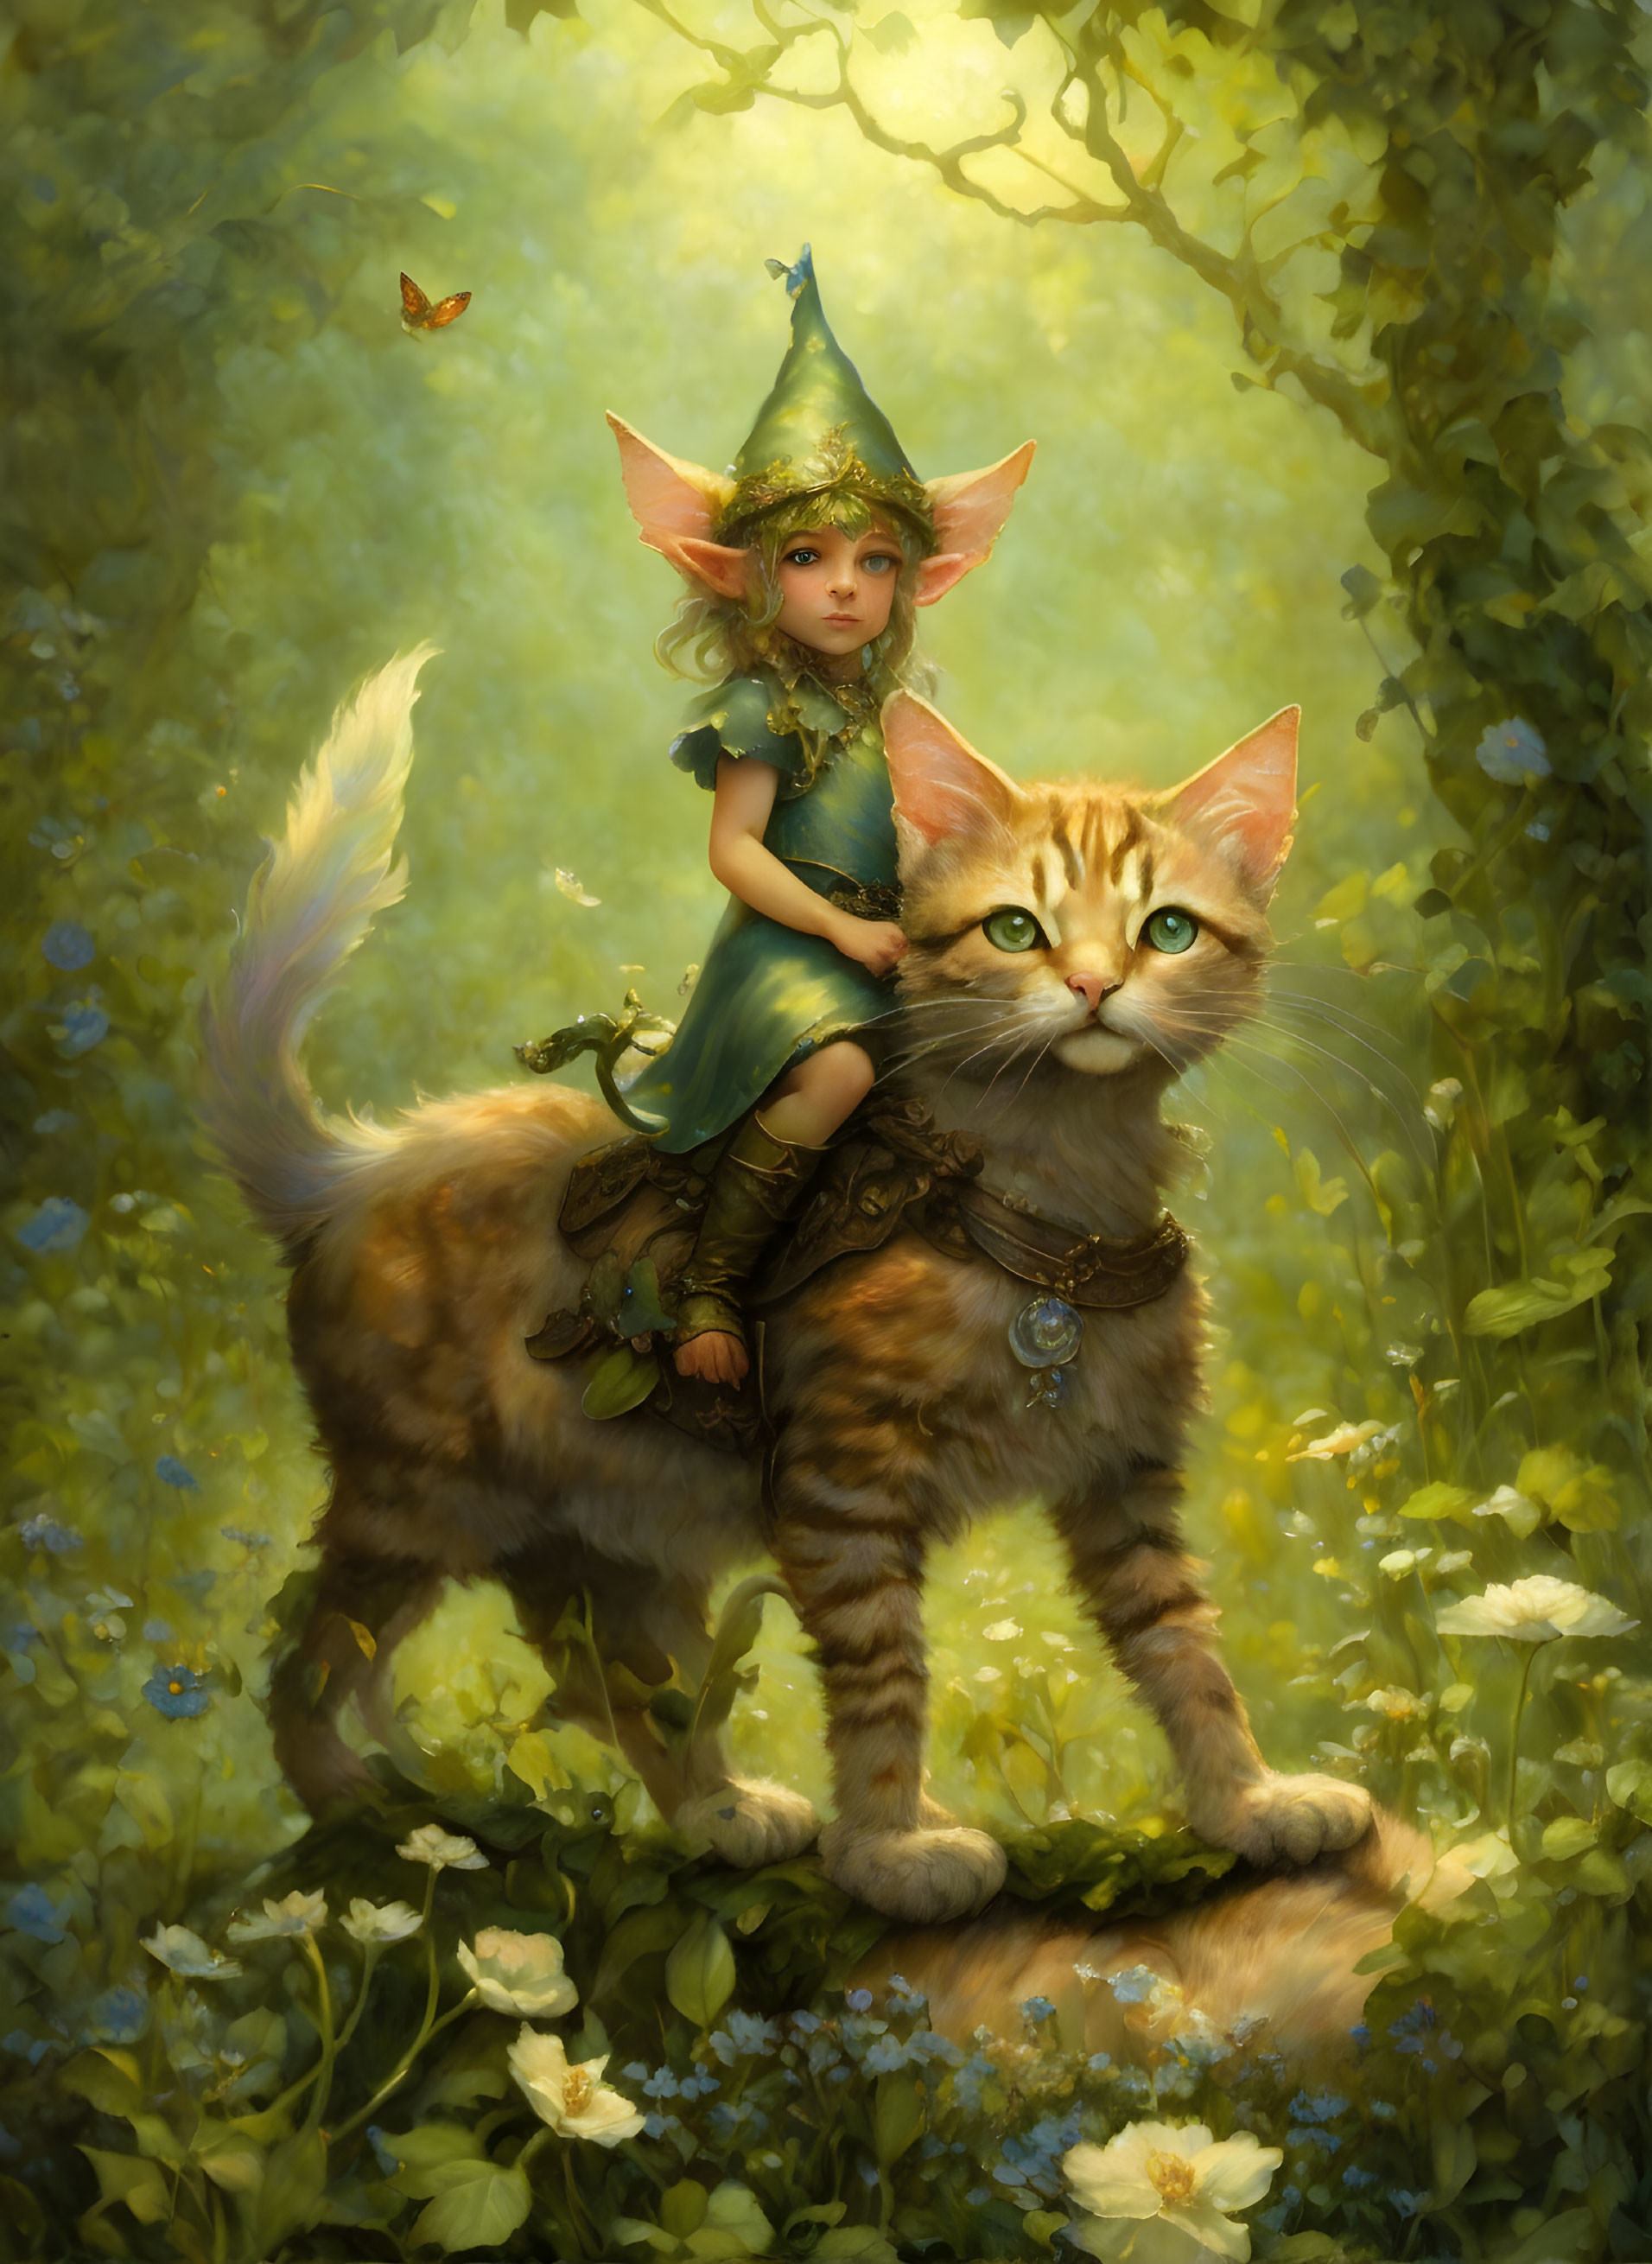 A cute, little elf, riding on a cat